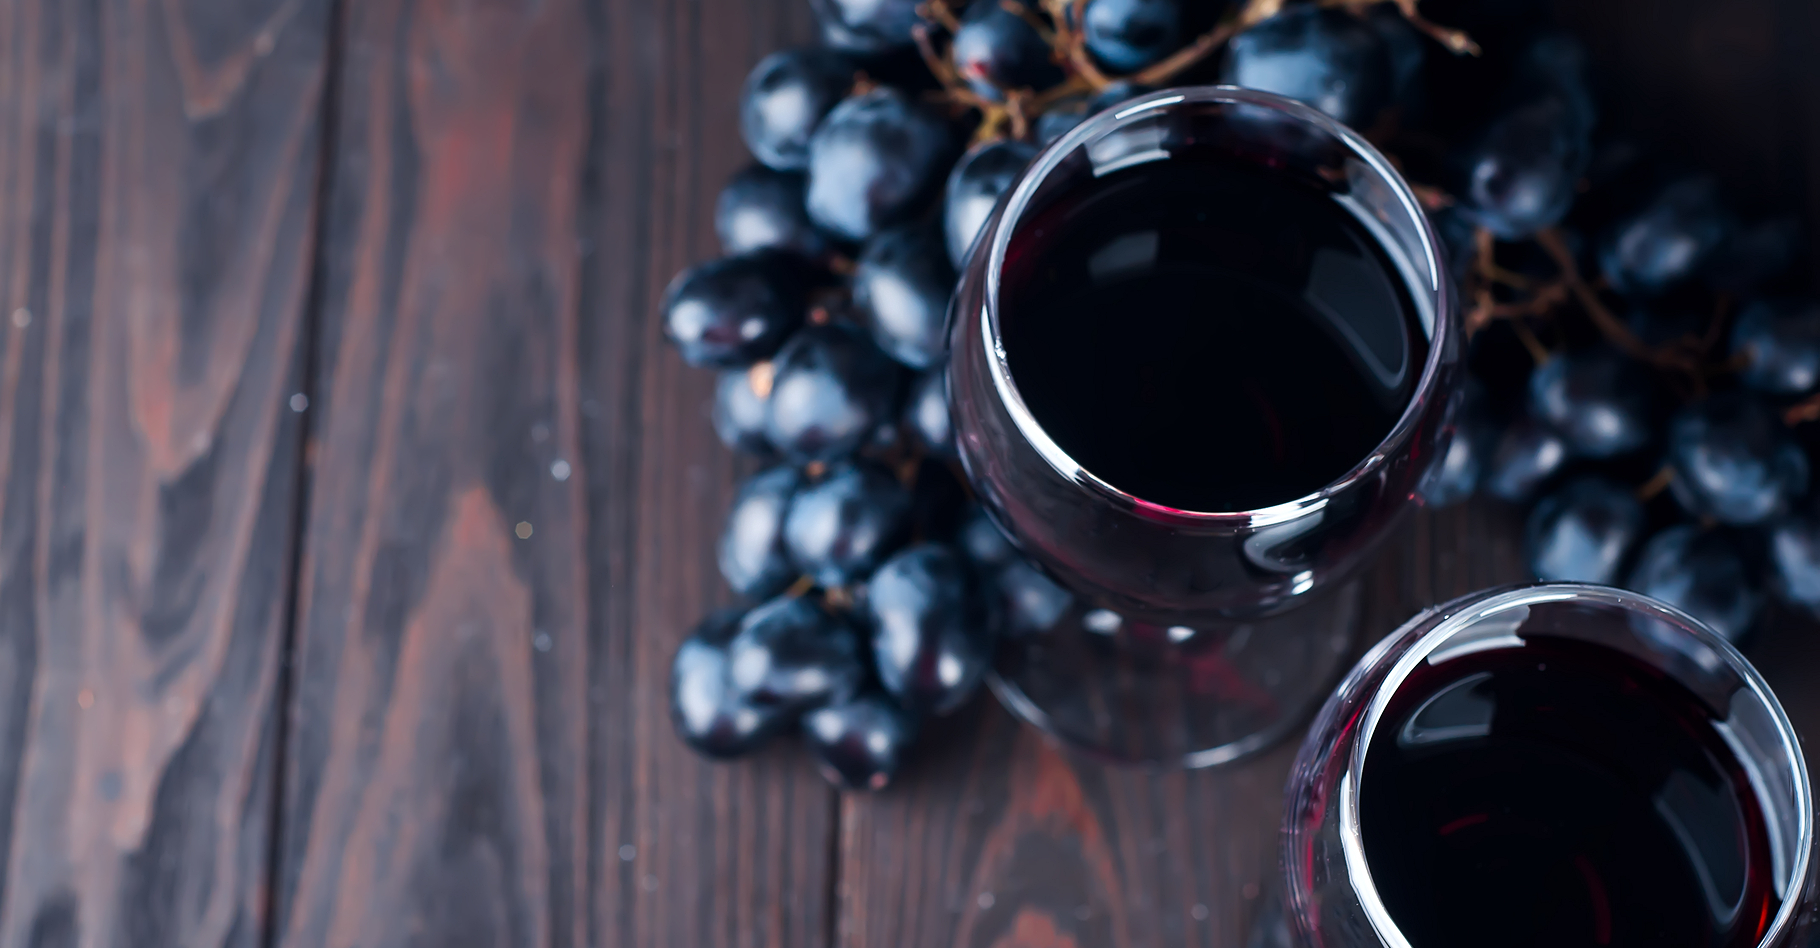 Comment transformer du raisin en vin ?